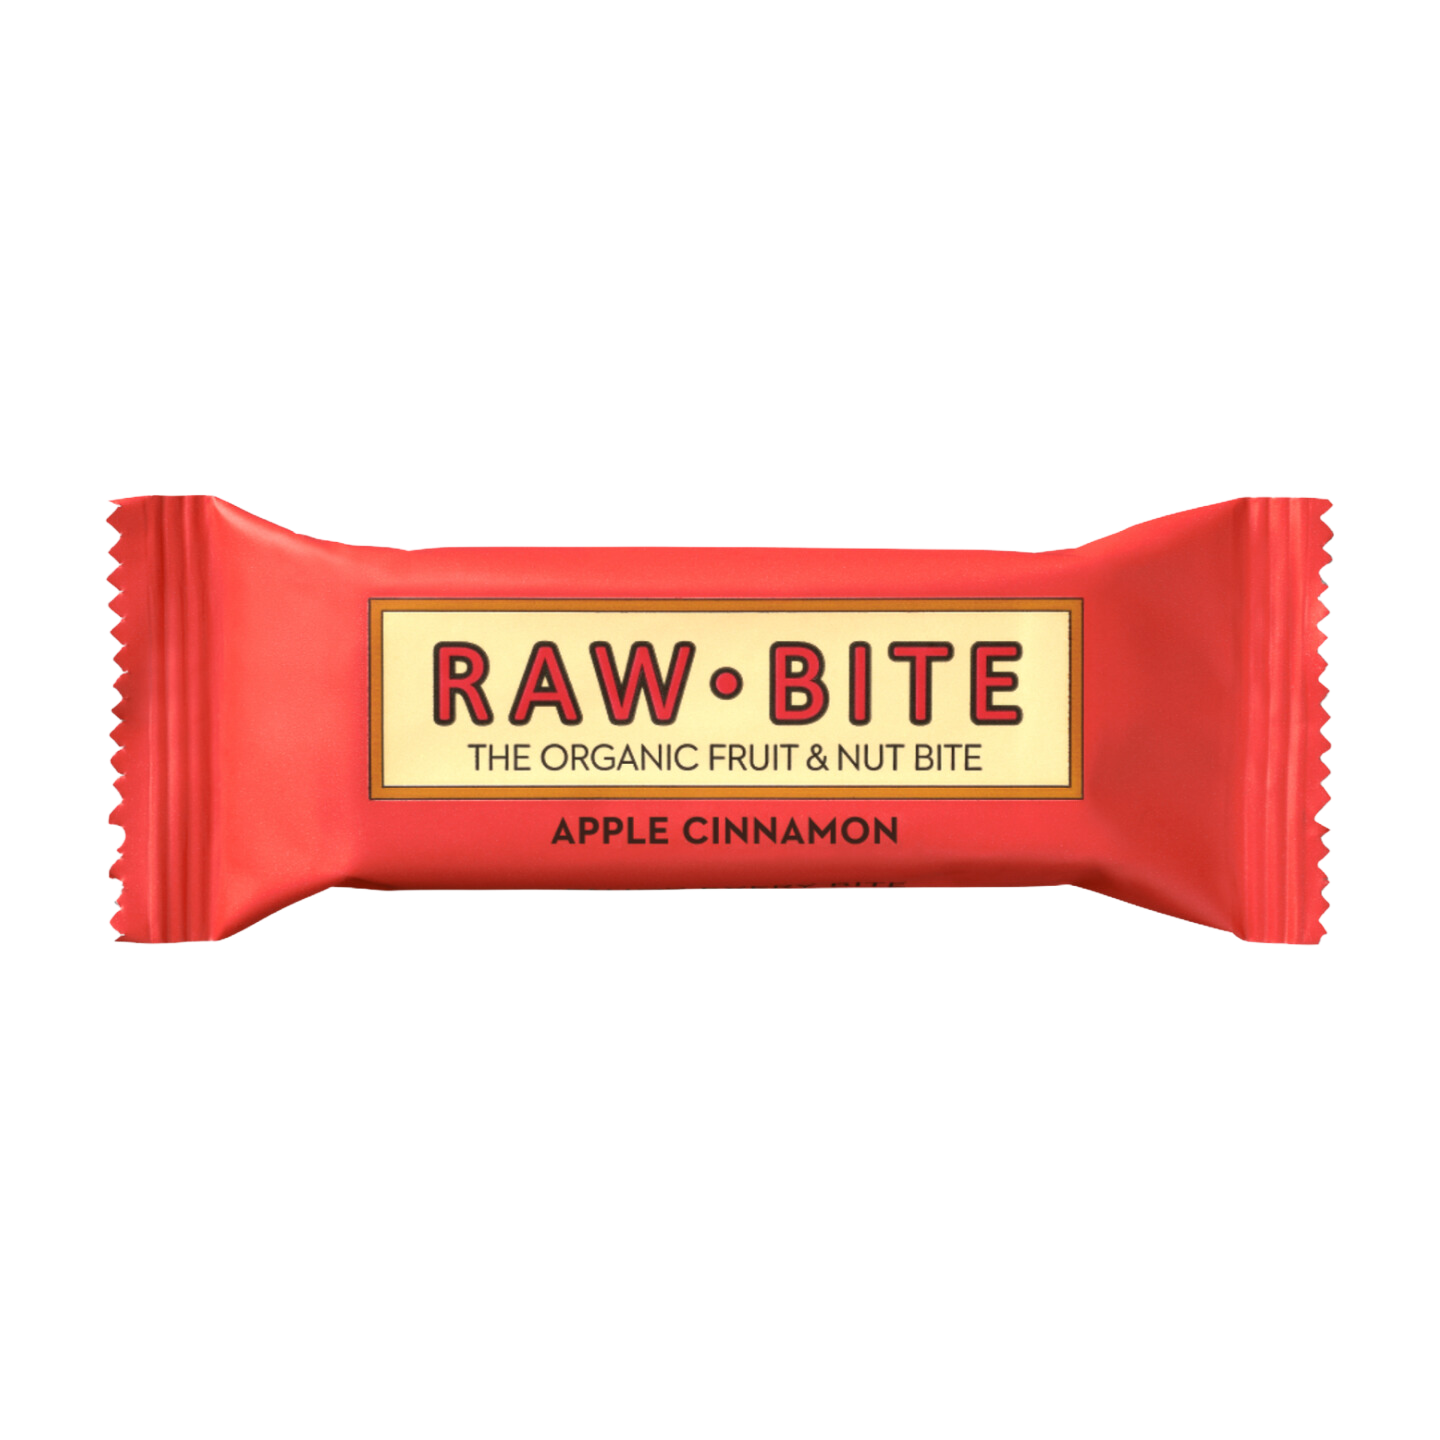 Rawbite Bar with apple and cinnamon